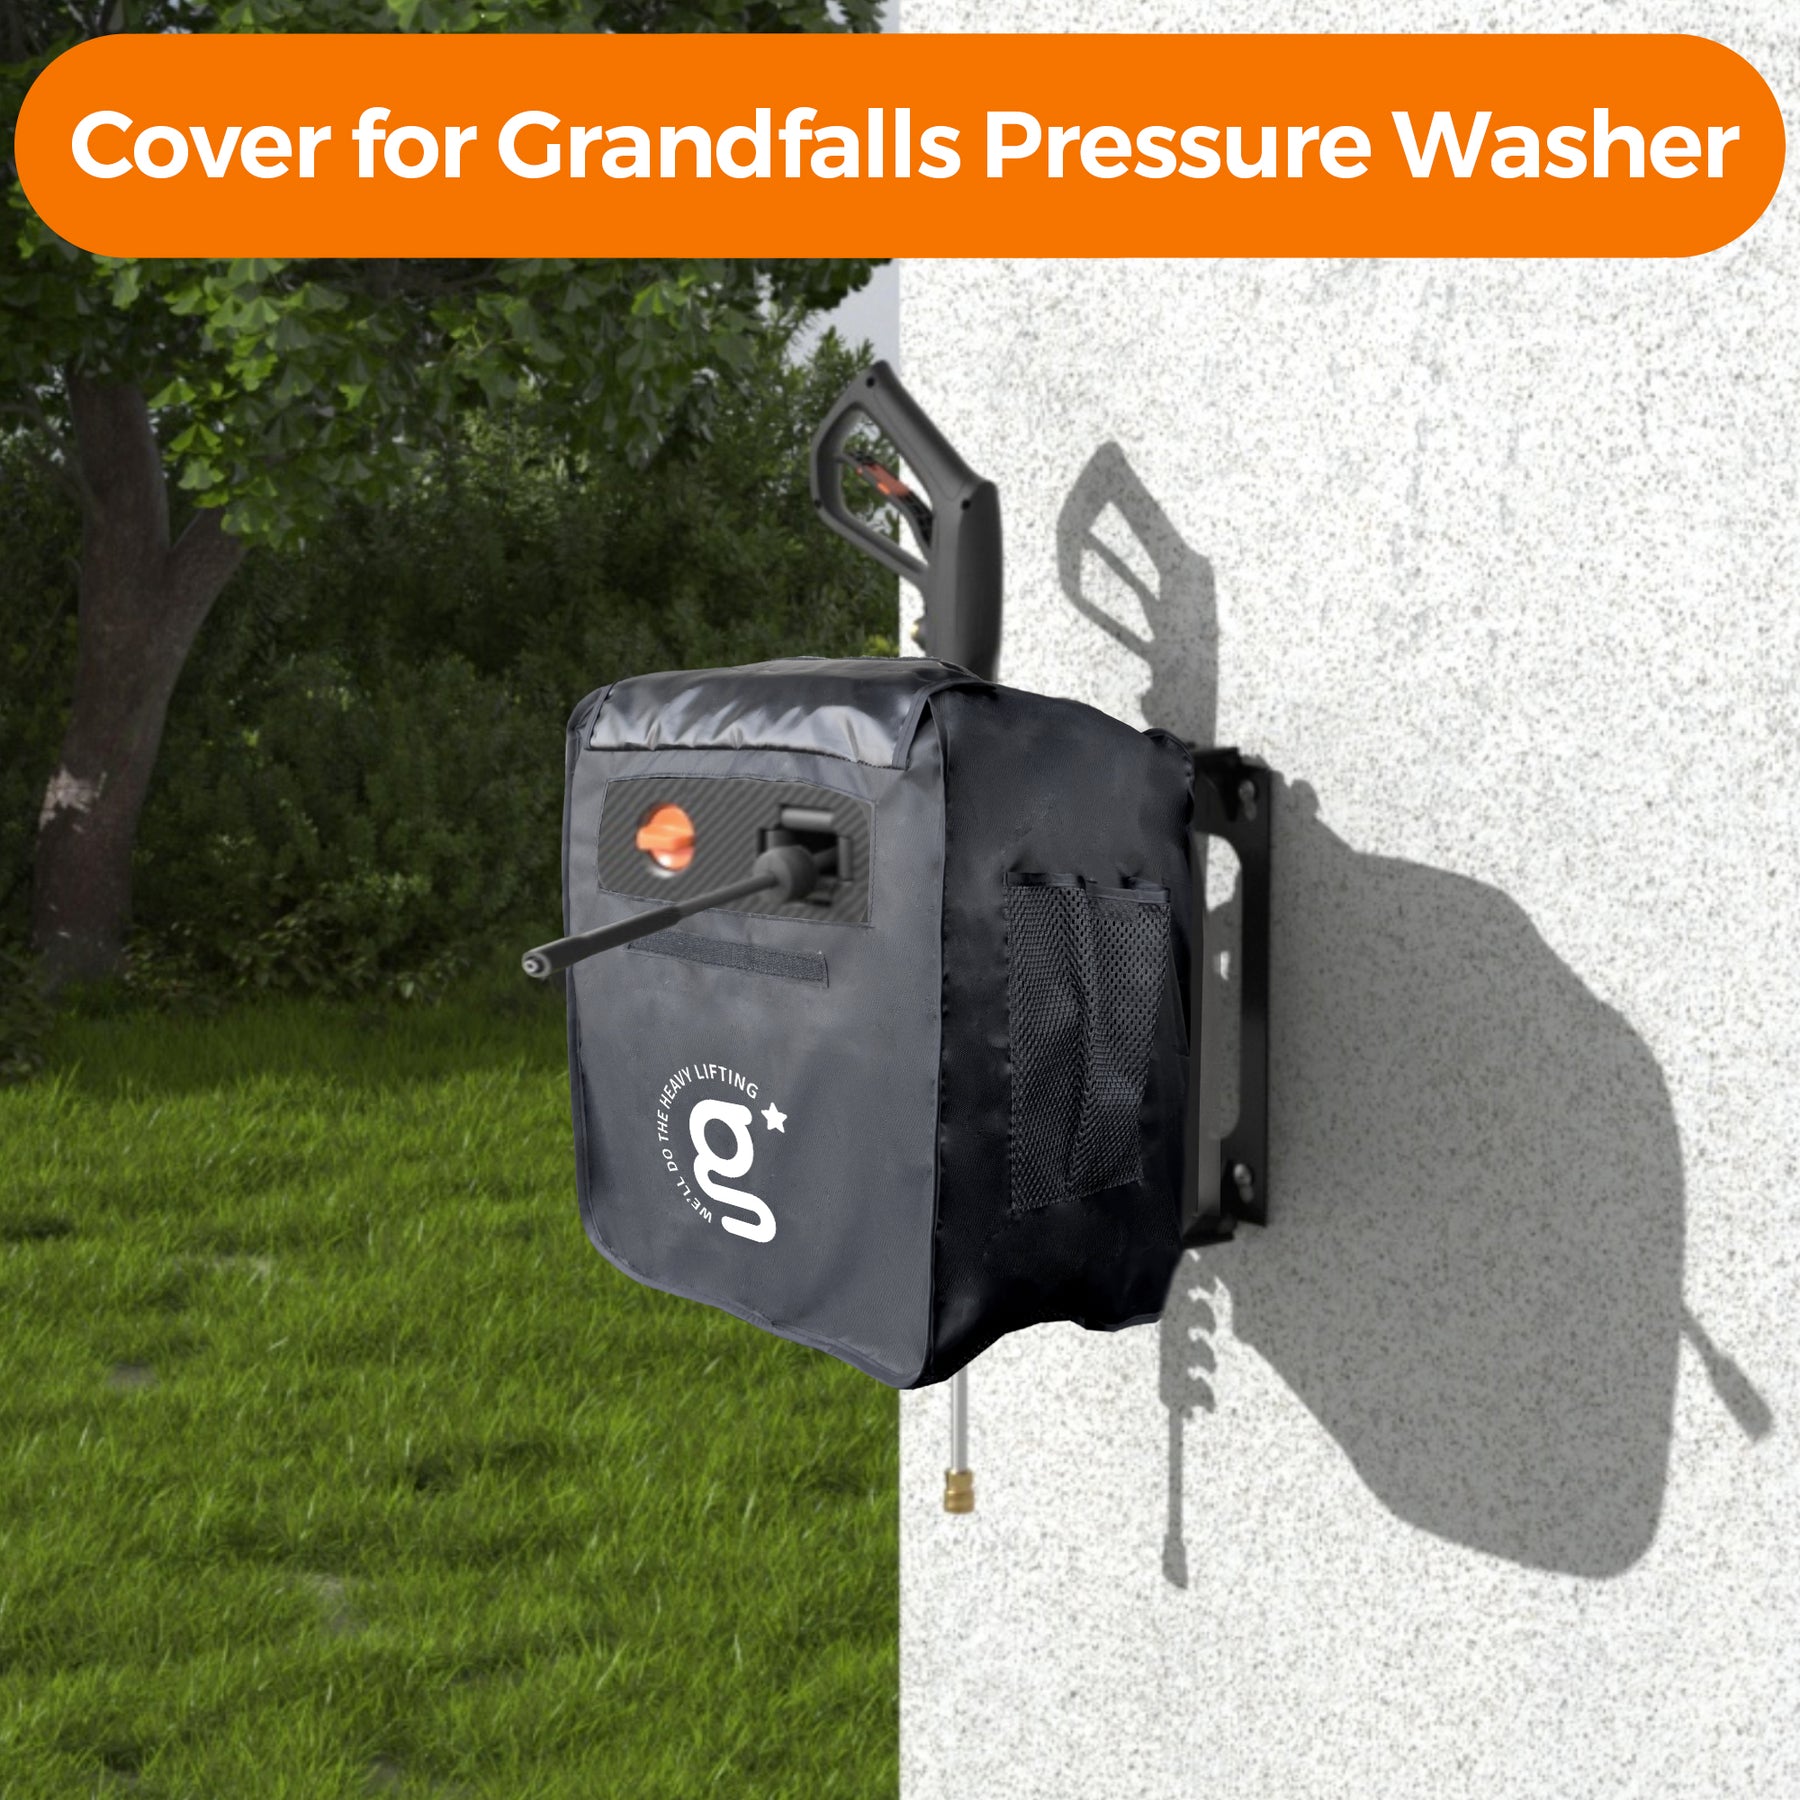 Grandfalls Pressure Washer G20 Cover